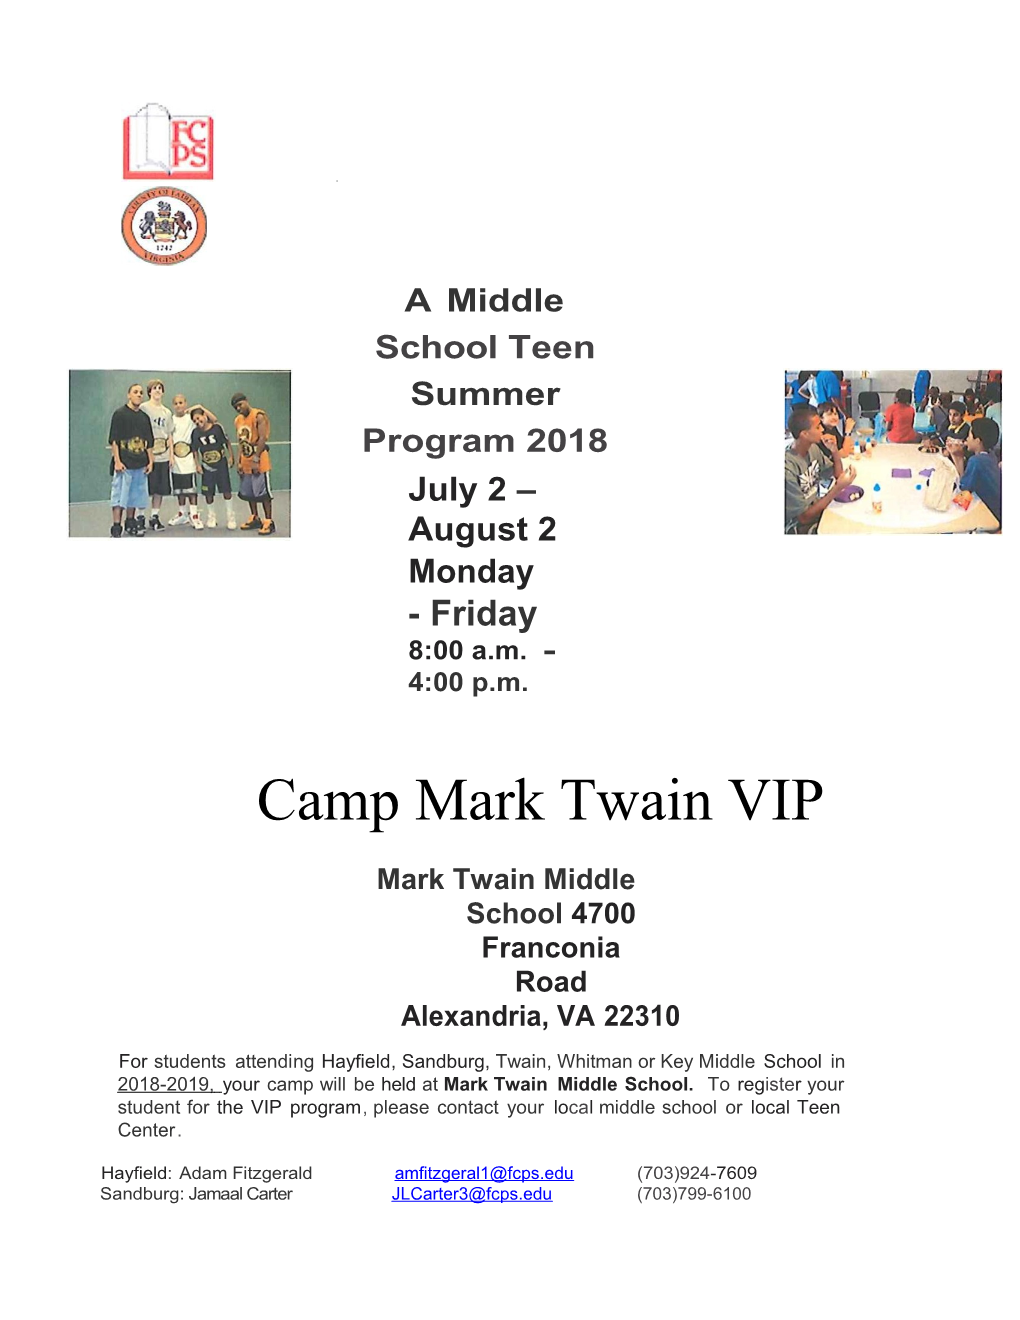 Mark Twain Middle School 4700 Franconia Road